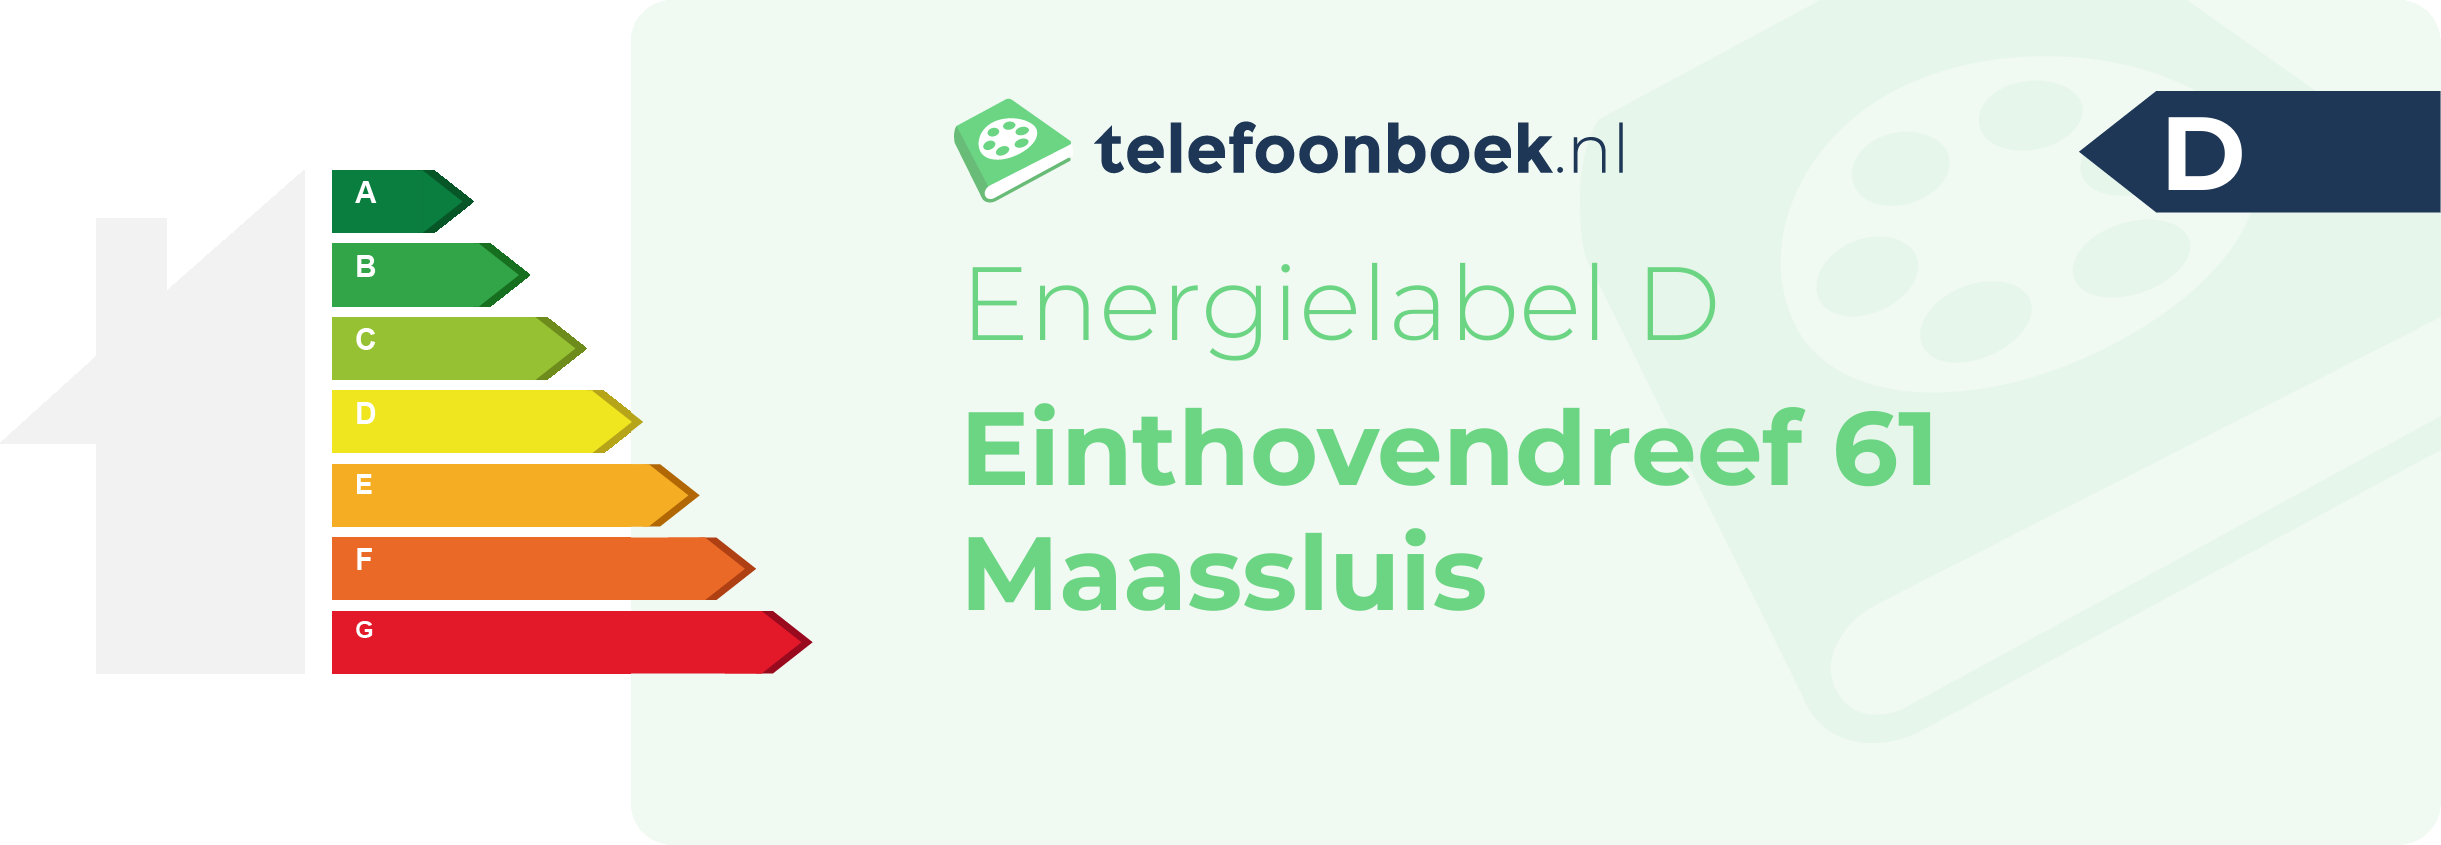 Energielabel Einthovendreef 61 Maassluis